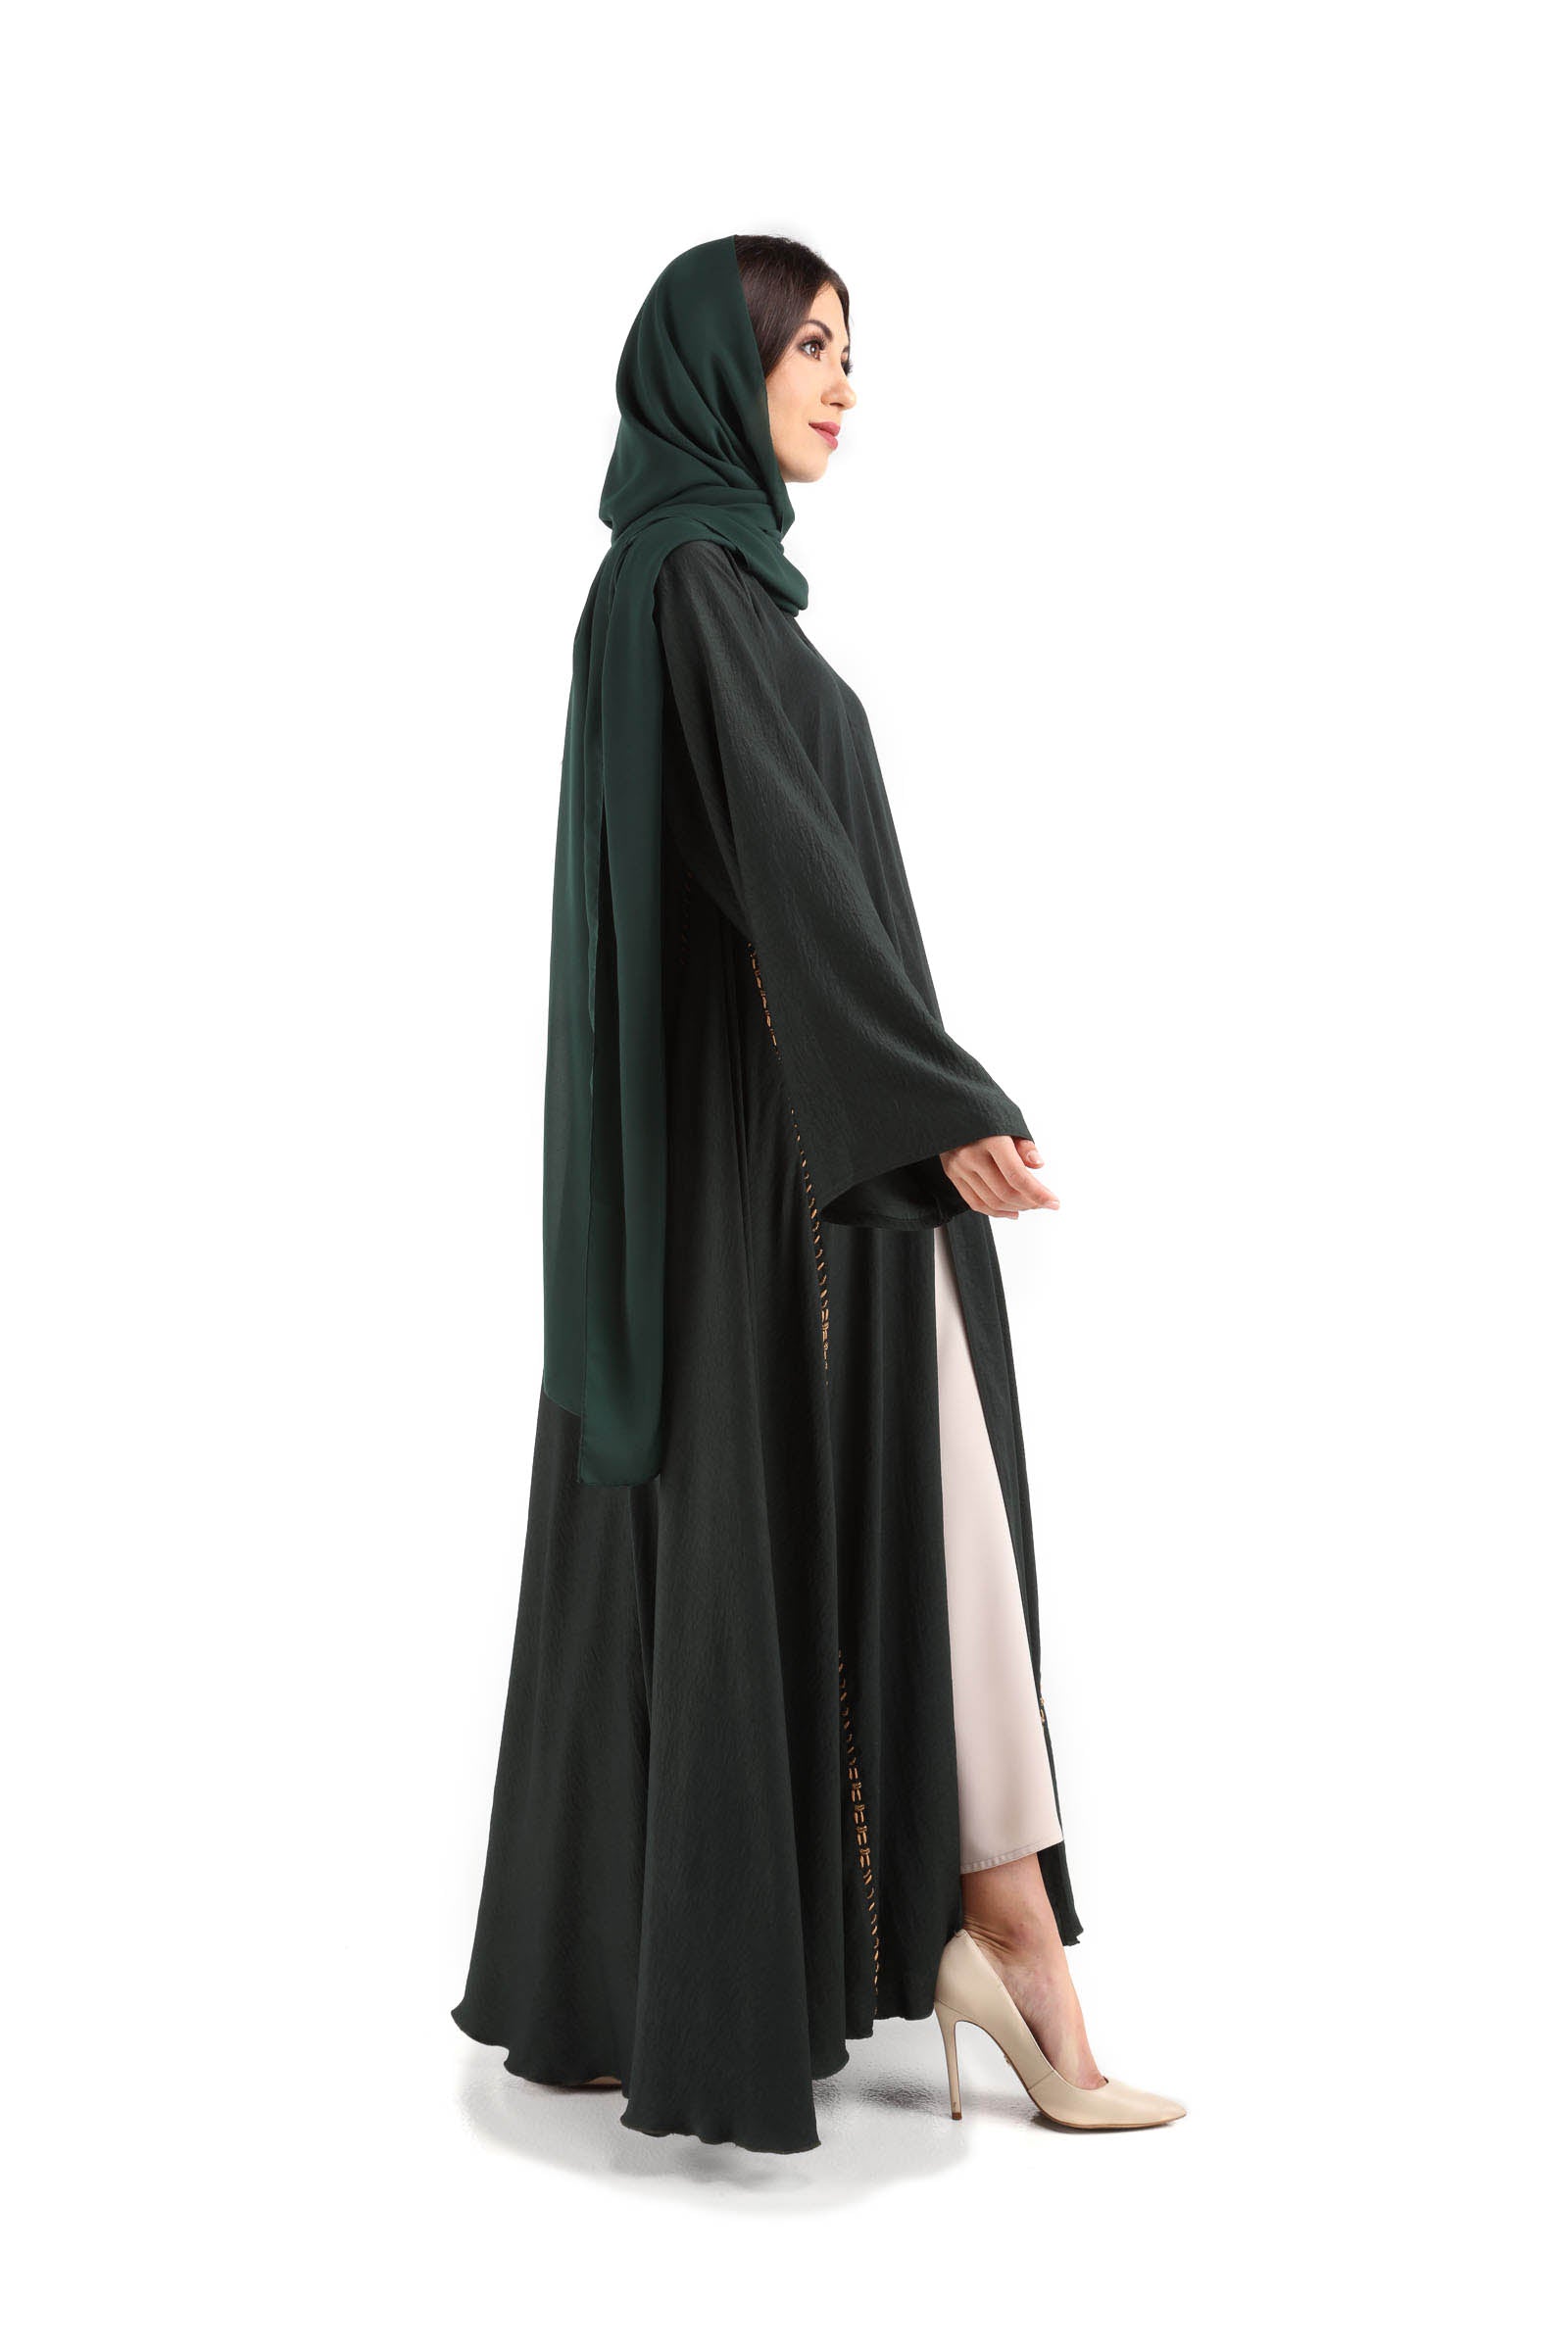 Shop Online Green Abaya With Handmade Design | Hanayen Luxury Abaya ...